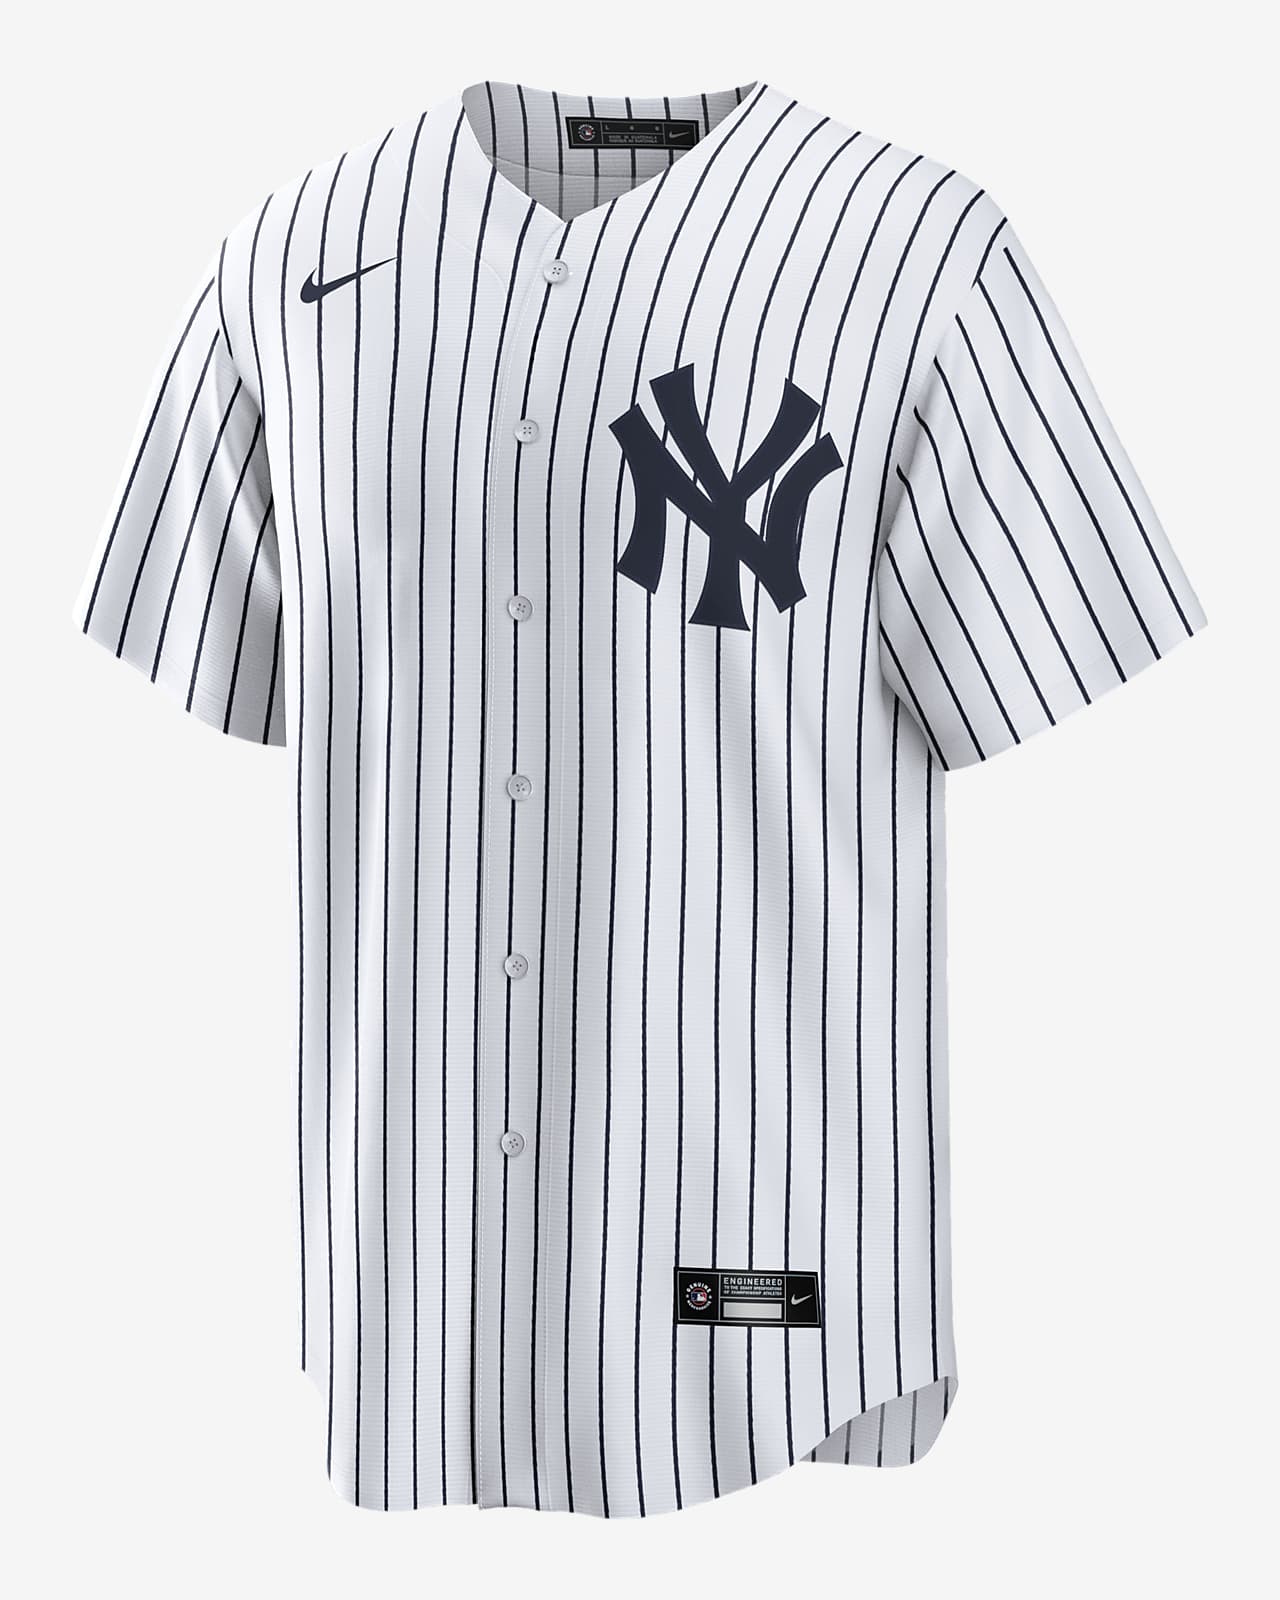 MLB New York Yankees (Josh Donaldson) Men's Replica Baseball